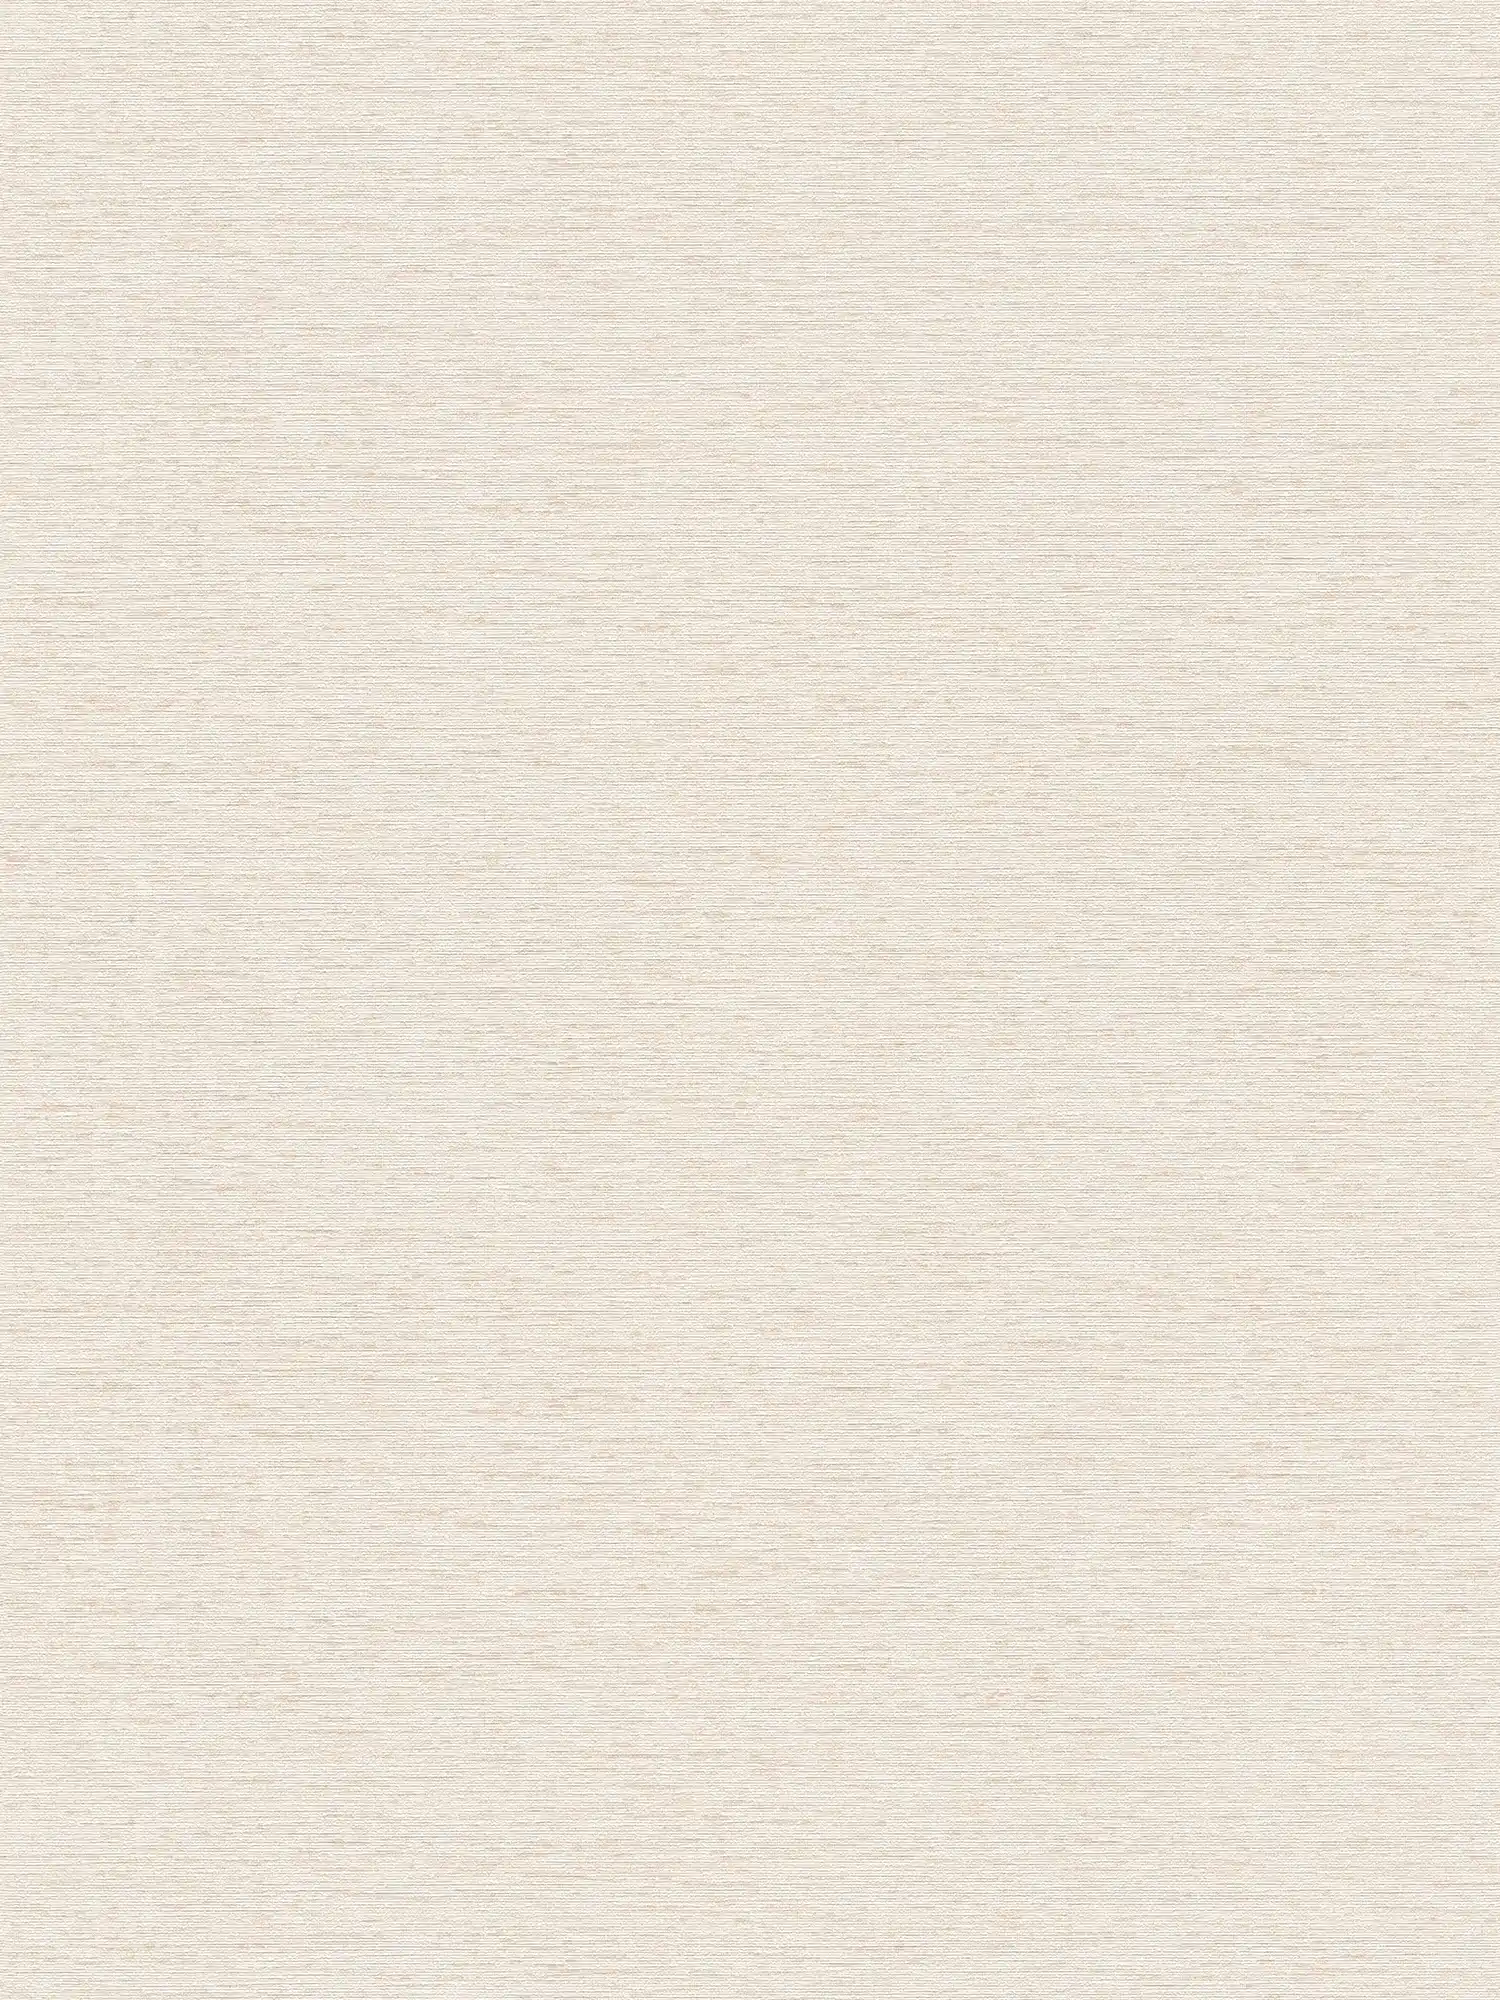 Plain wallpaper with fabric structure, matt - cream, white, beige
